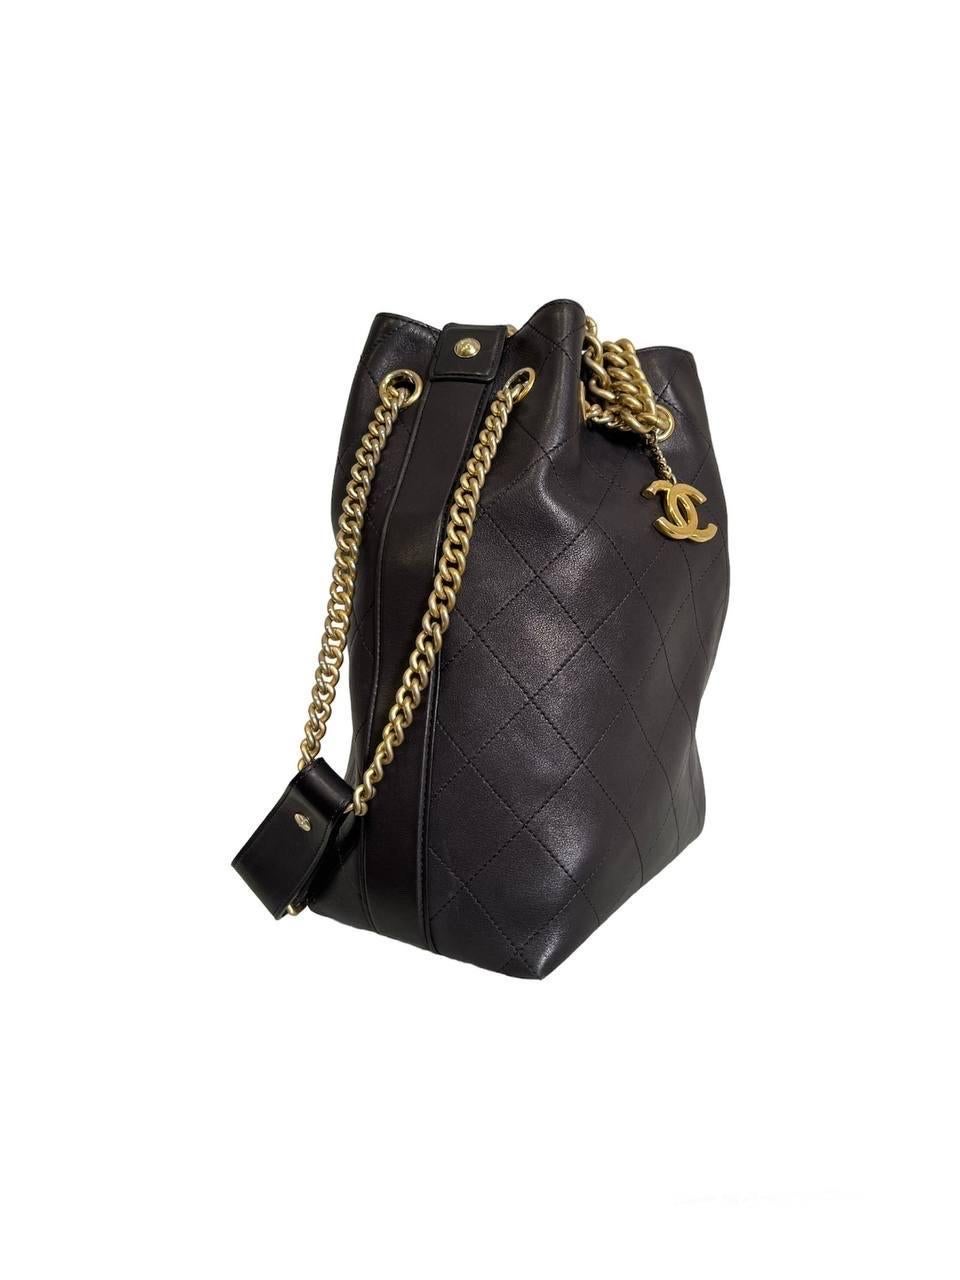 Women's 2016 Chanel Black Quilted Bucket Shoulder Bag For Sale